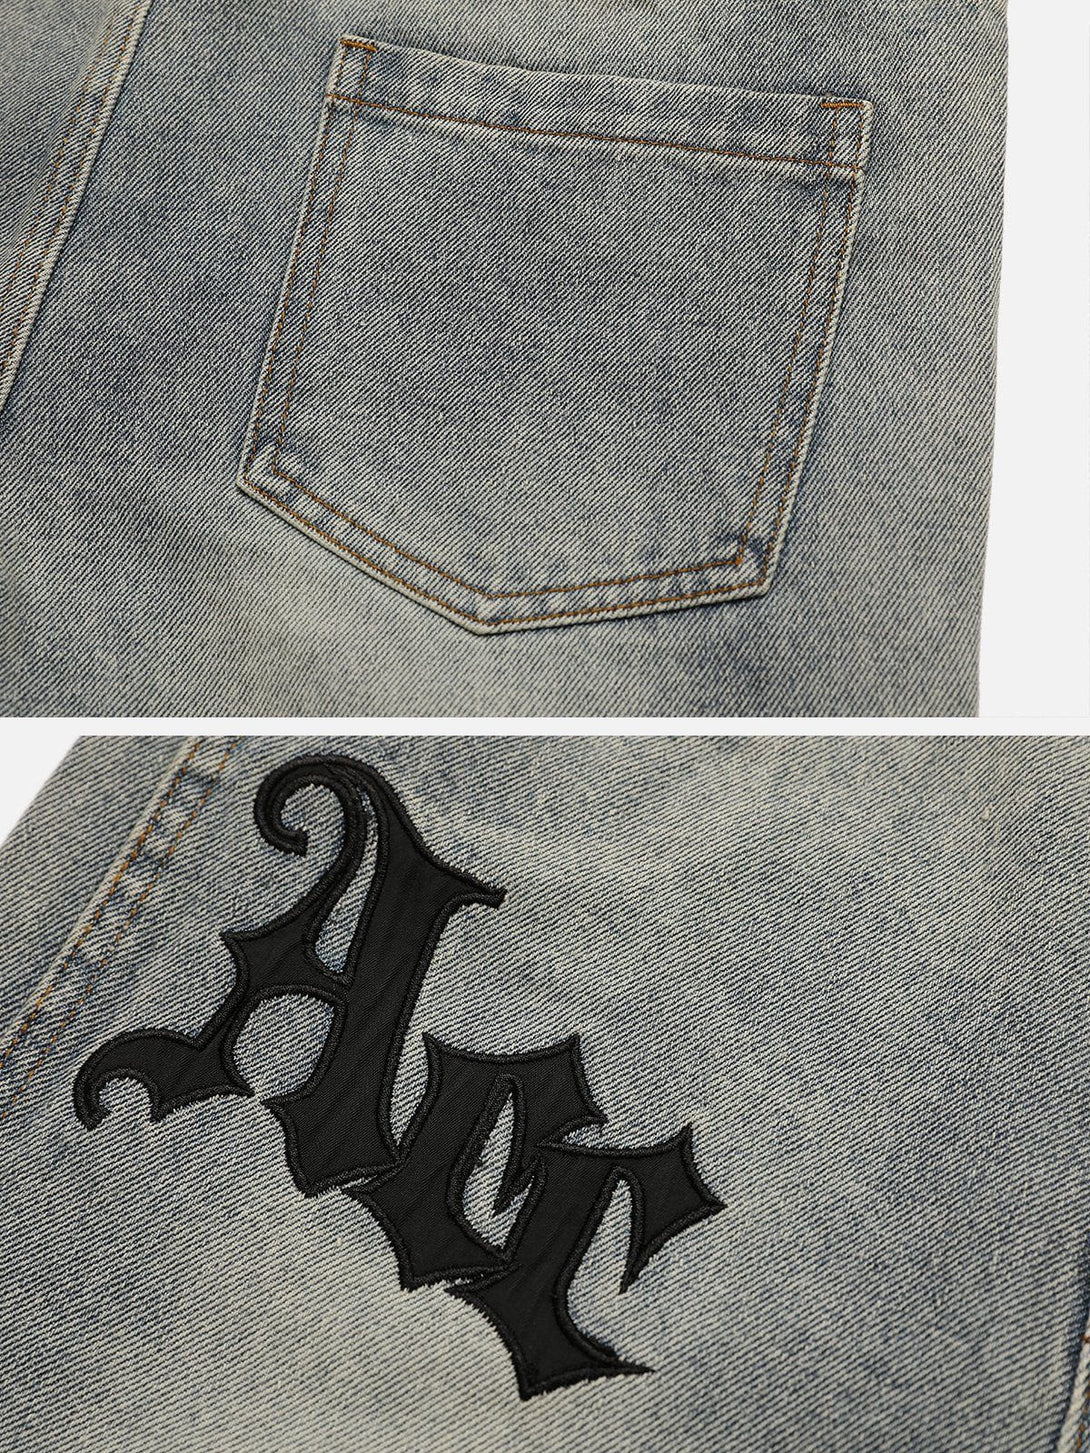 AlanBalen® - Gothic Alphabet Patch Embroidered Jeans AlanBalen